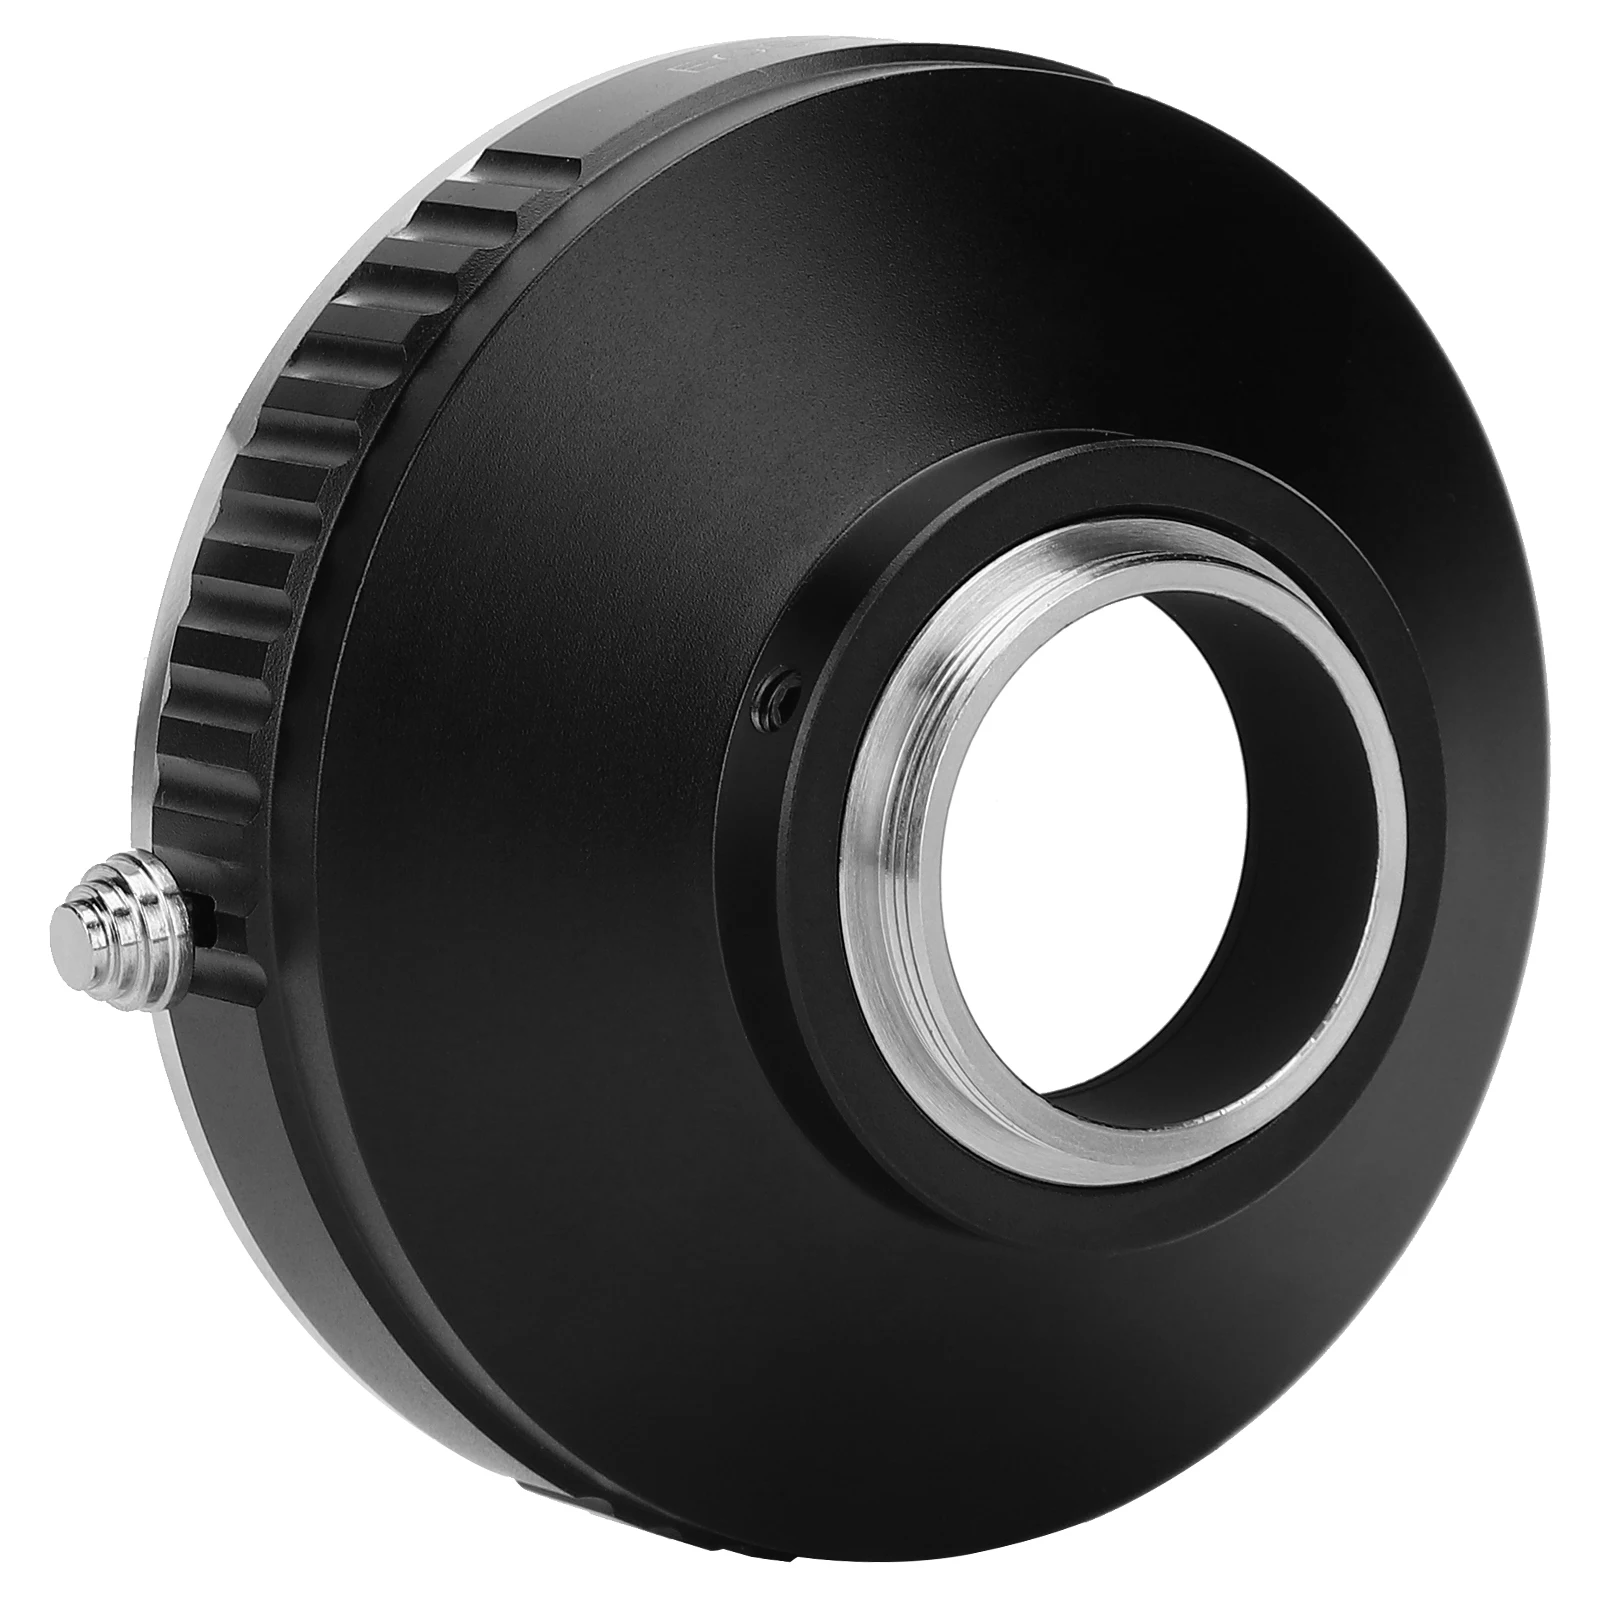 

Lens Adapter Ring Fit for Canon EF/EFâ€‘S Mount Lens Installing for C Mount Camera Adaptor